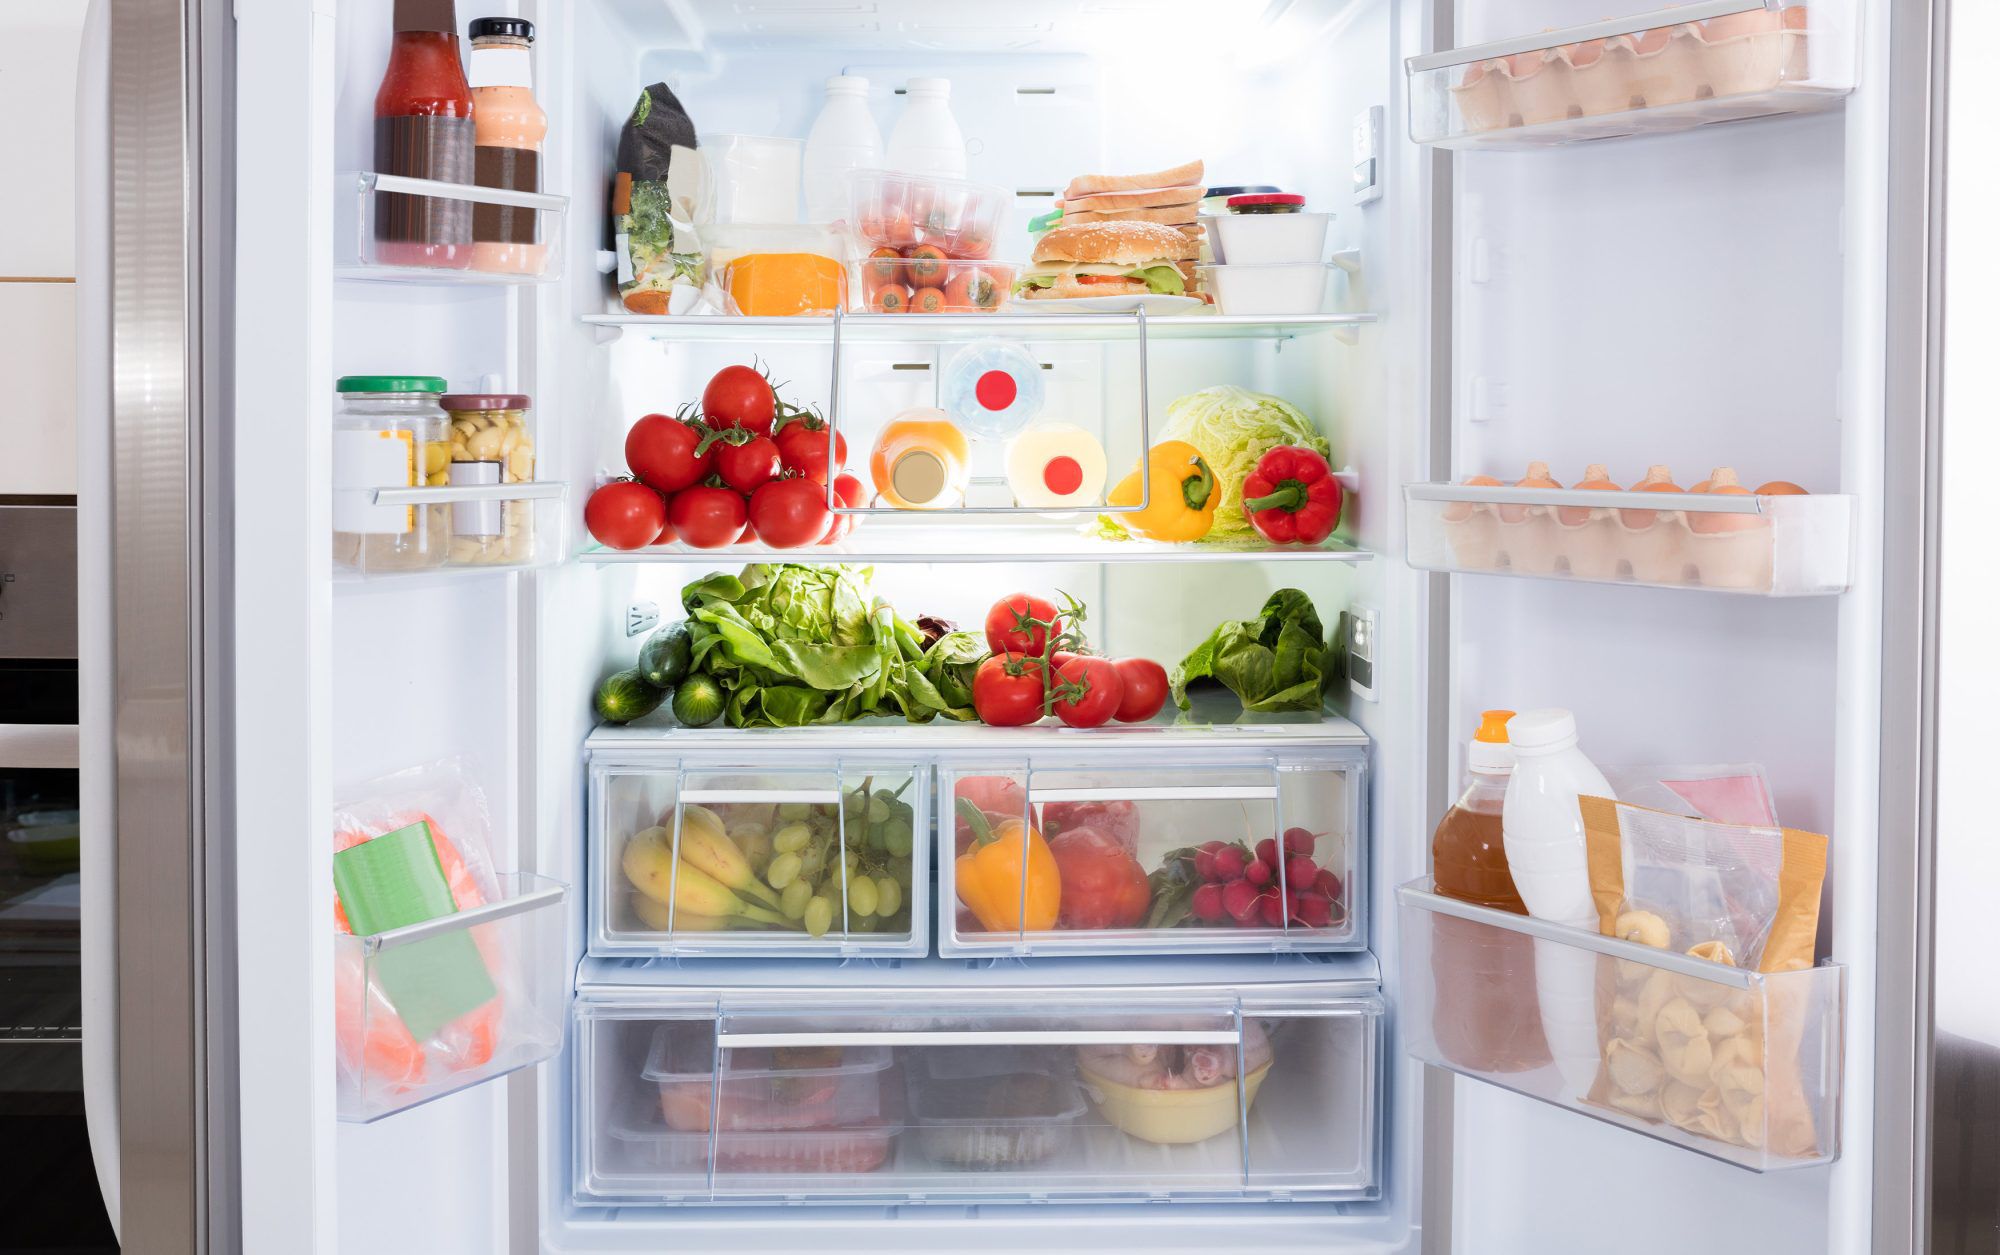 Restock and organize your fridge